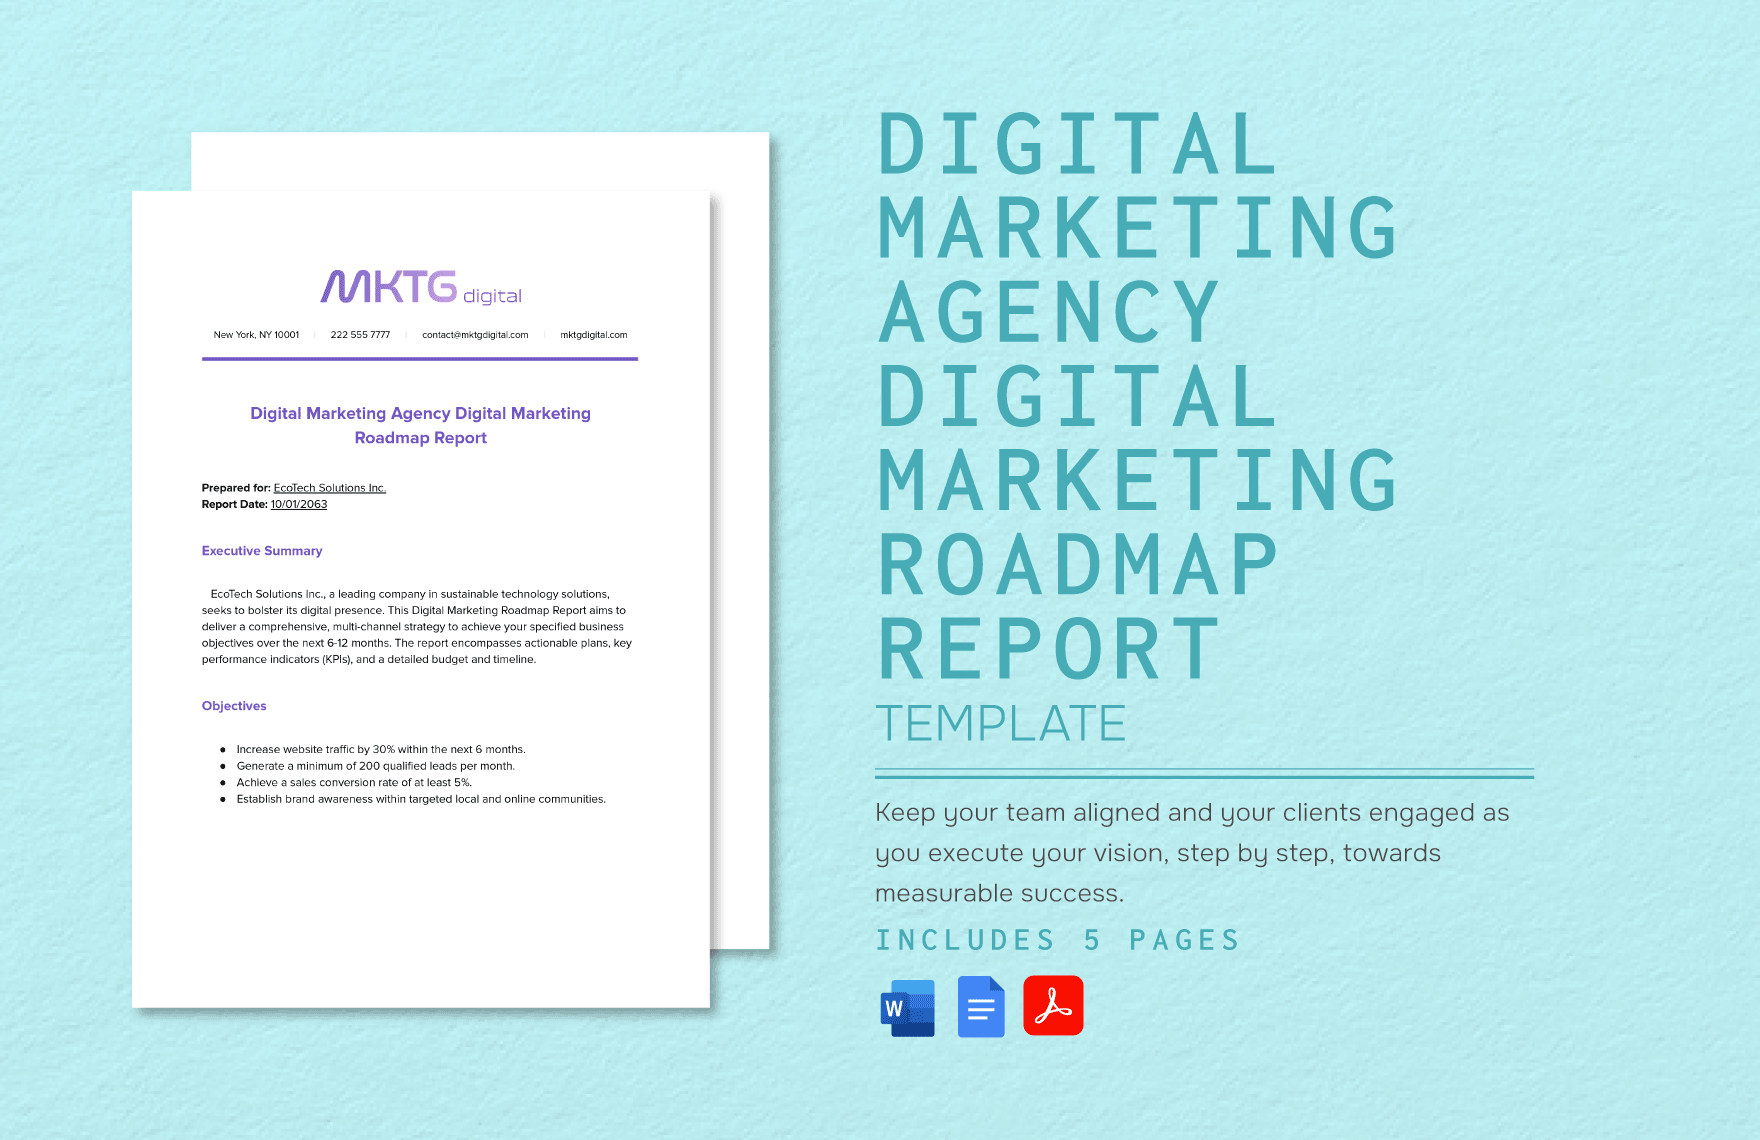 Digital Marketing Agency Digital Marketing Roadmap Report Template